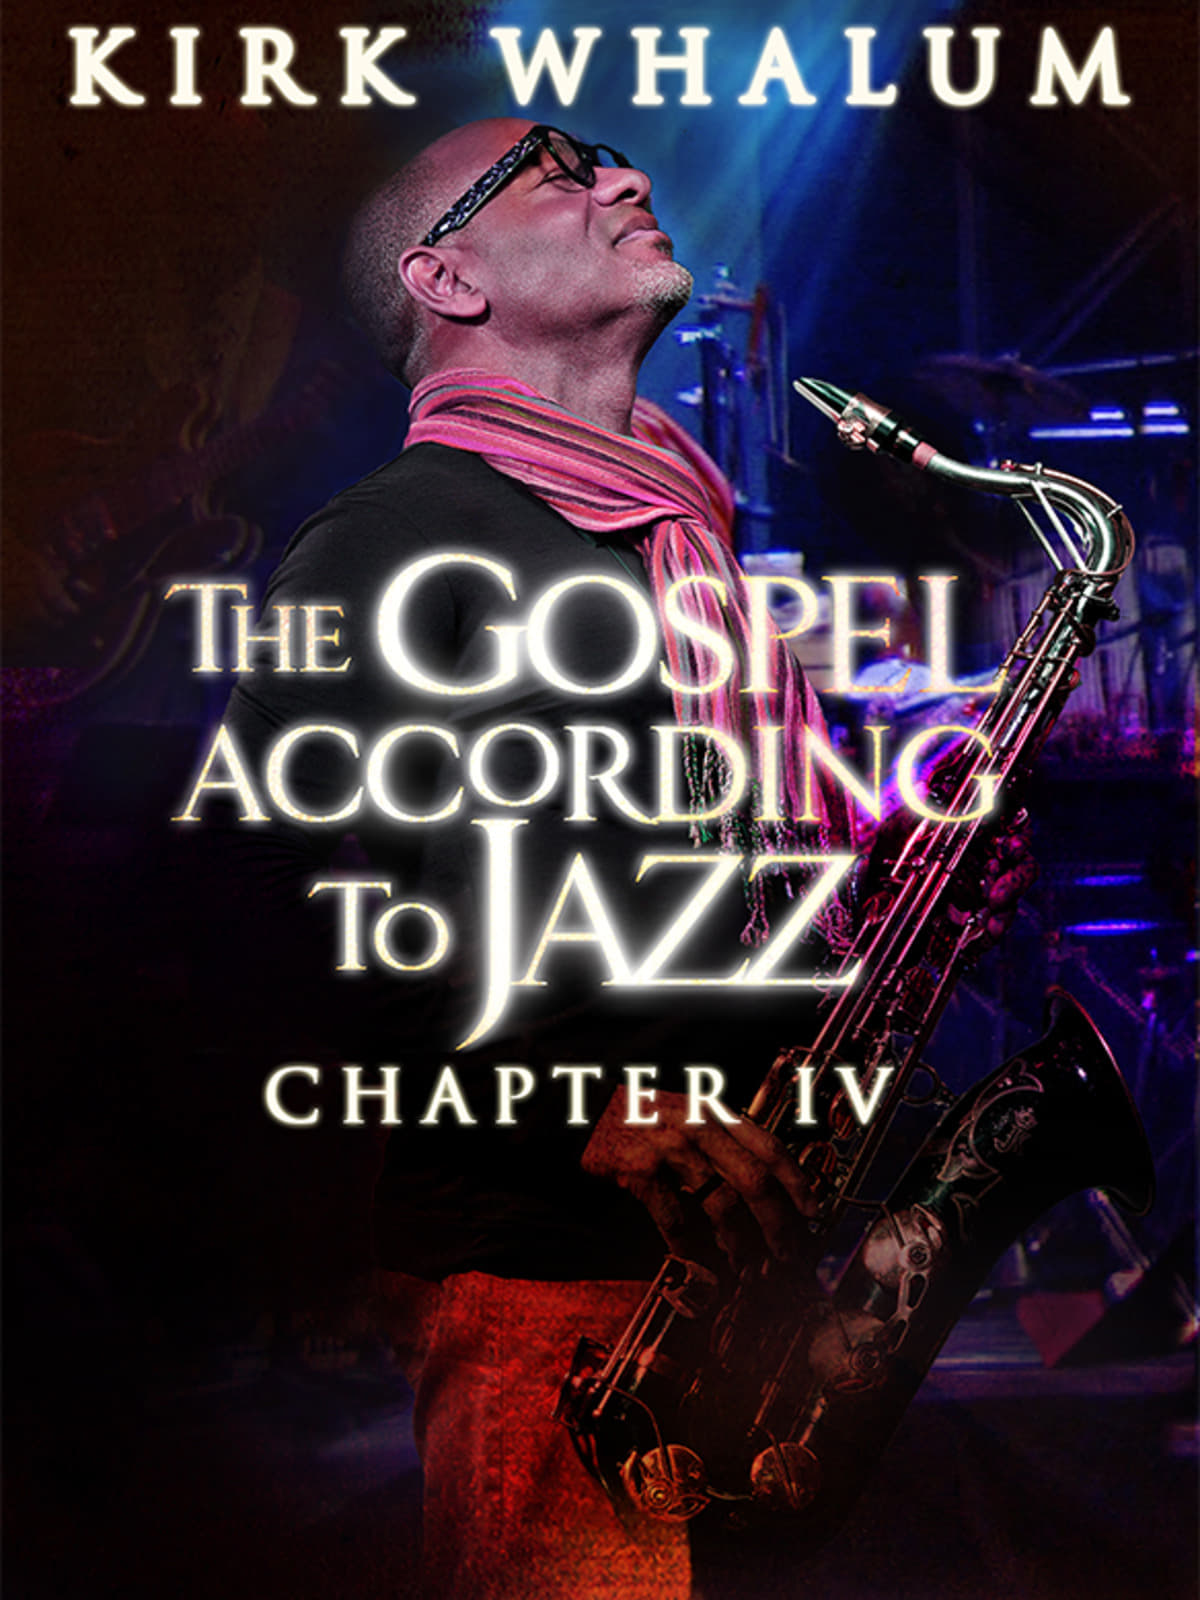 Kirk Whalum: The Gospel According to Jazz (IV) on FREECABLE TV